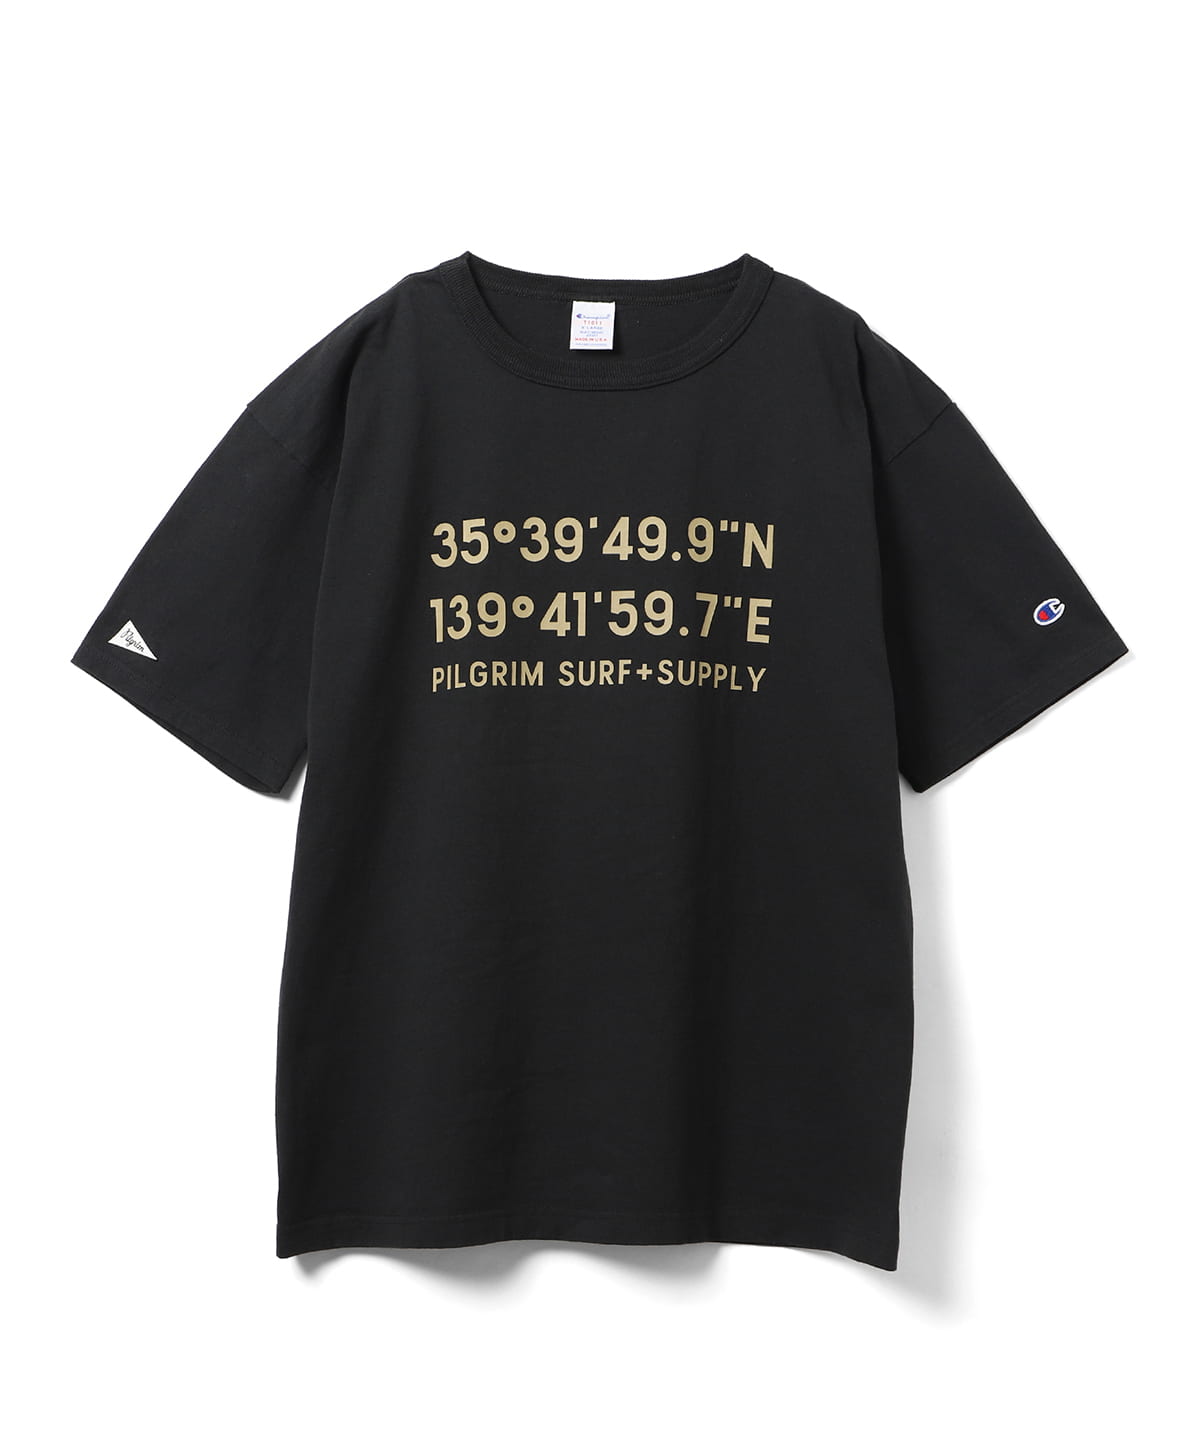 Champion × Pilgrim Surf＋Supply / Print Crew T-Shirtが5月上旬発売 (チャンピオン ピルグリム サーフ+サプライ)